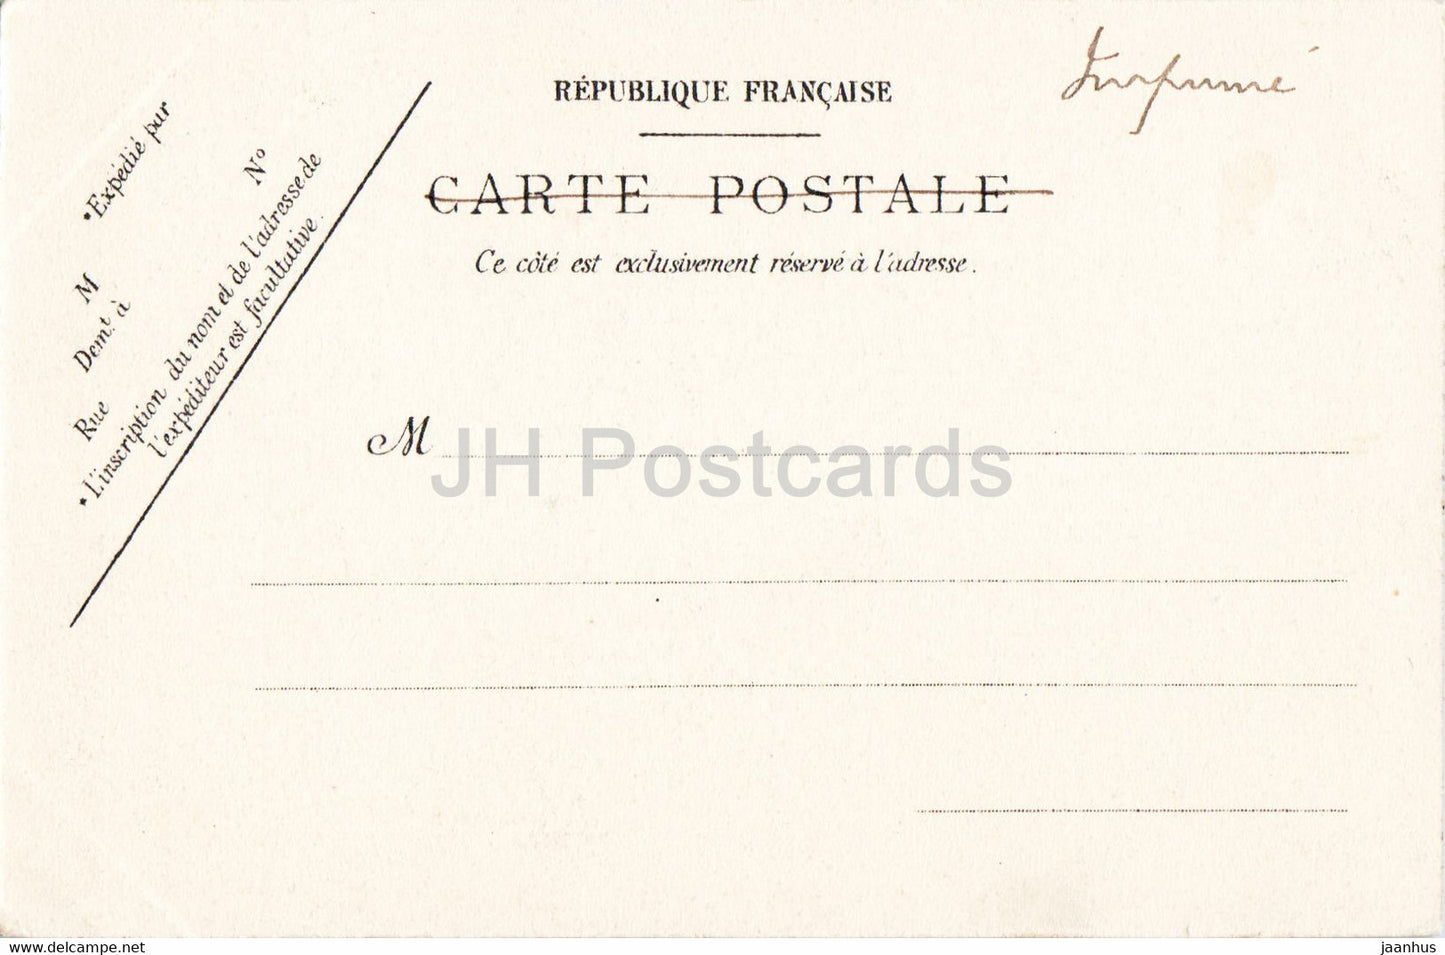 Lille - La Colonne - 5 - old postcard - 1903 - France - used